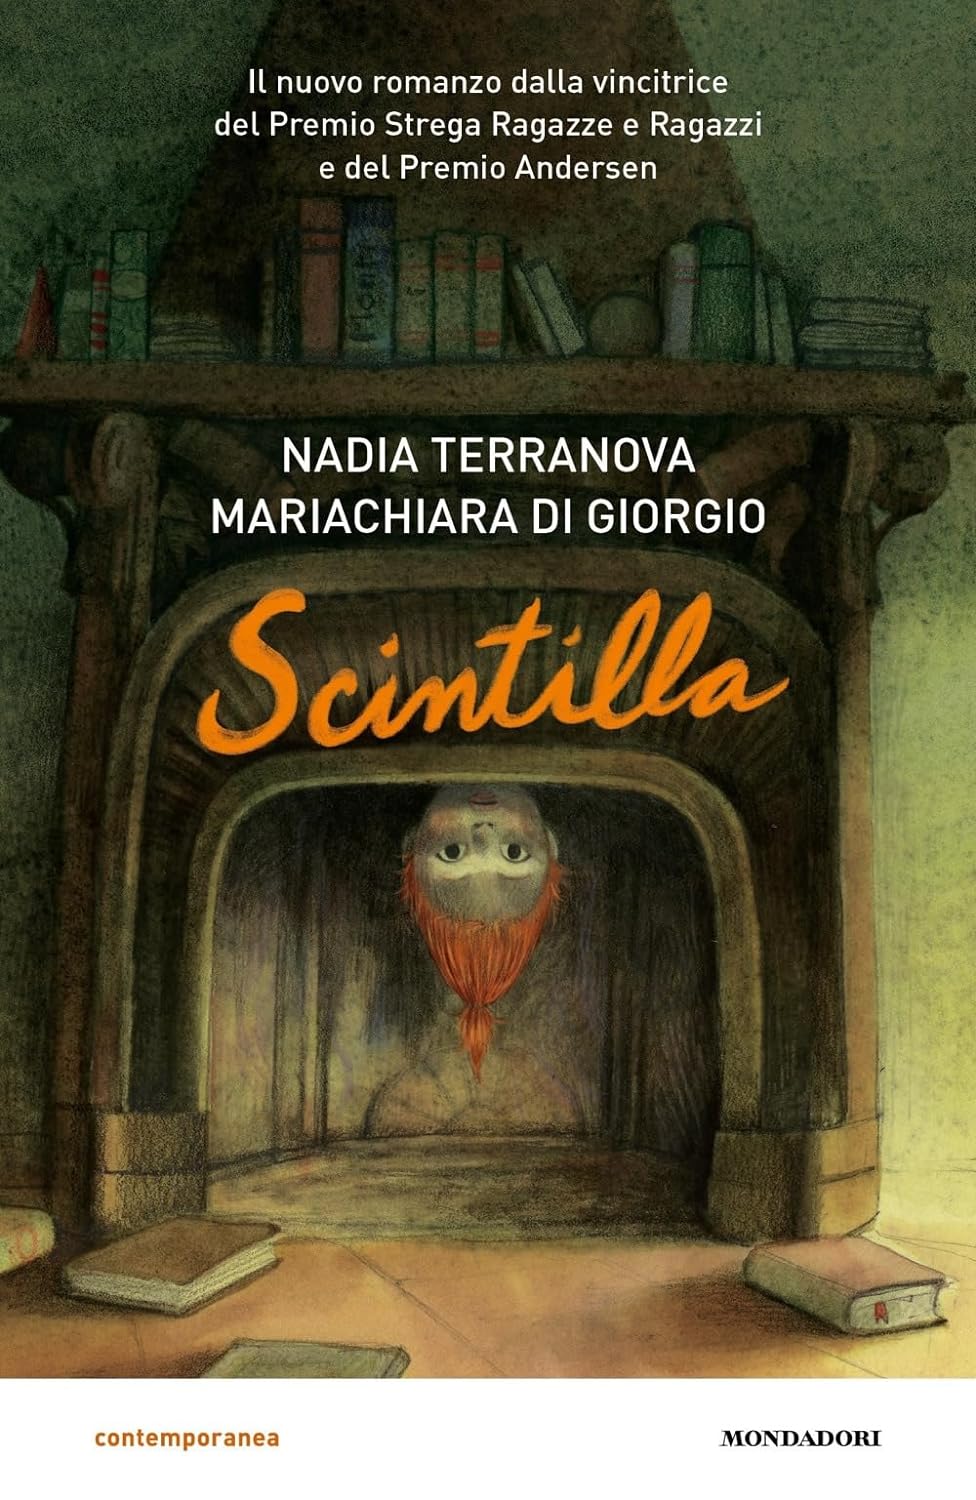 Nadia Terranova – Scintilla